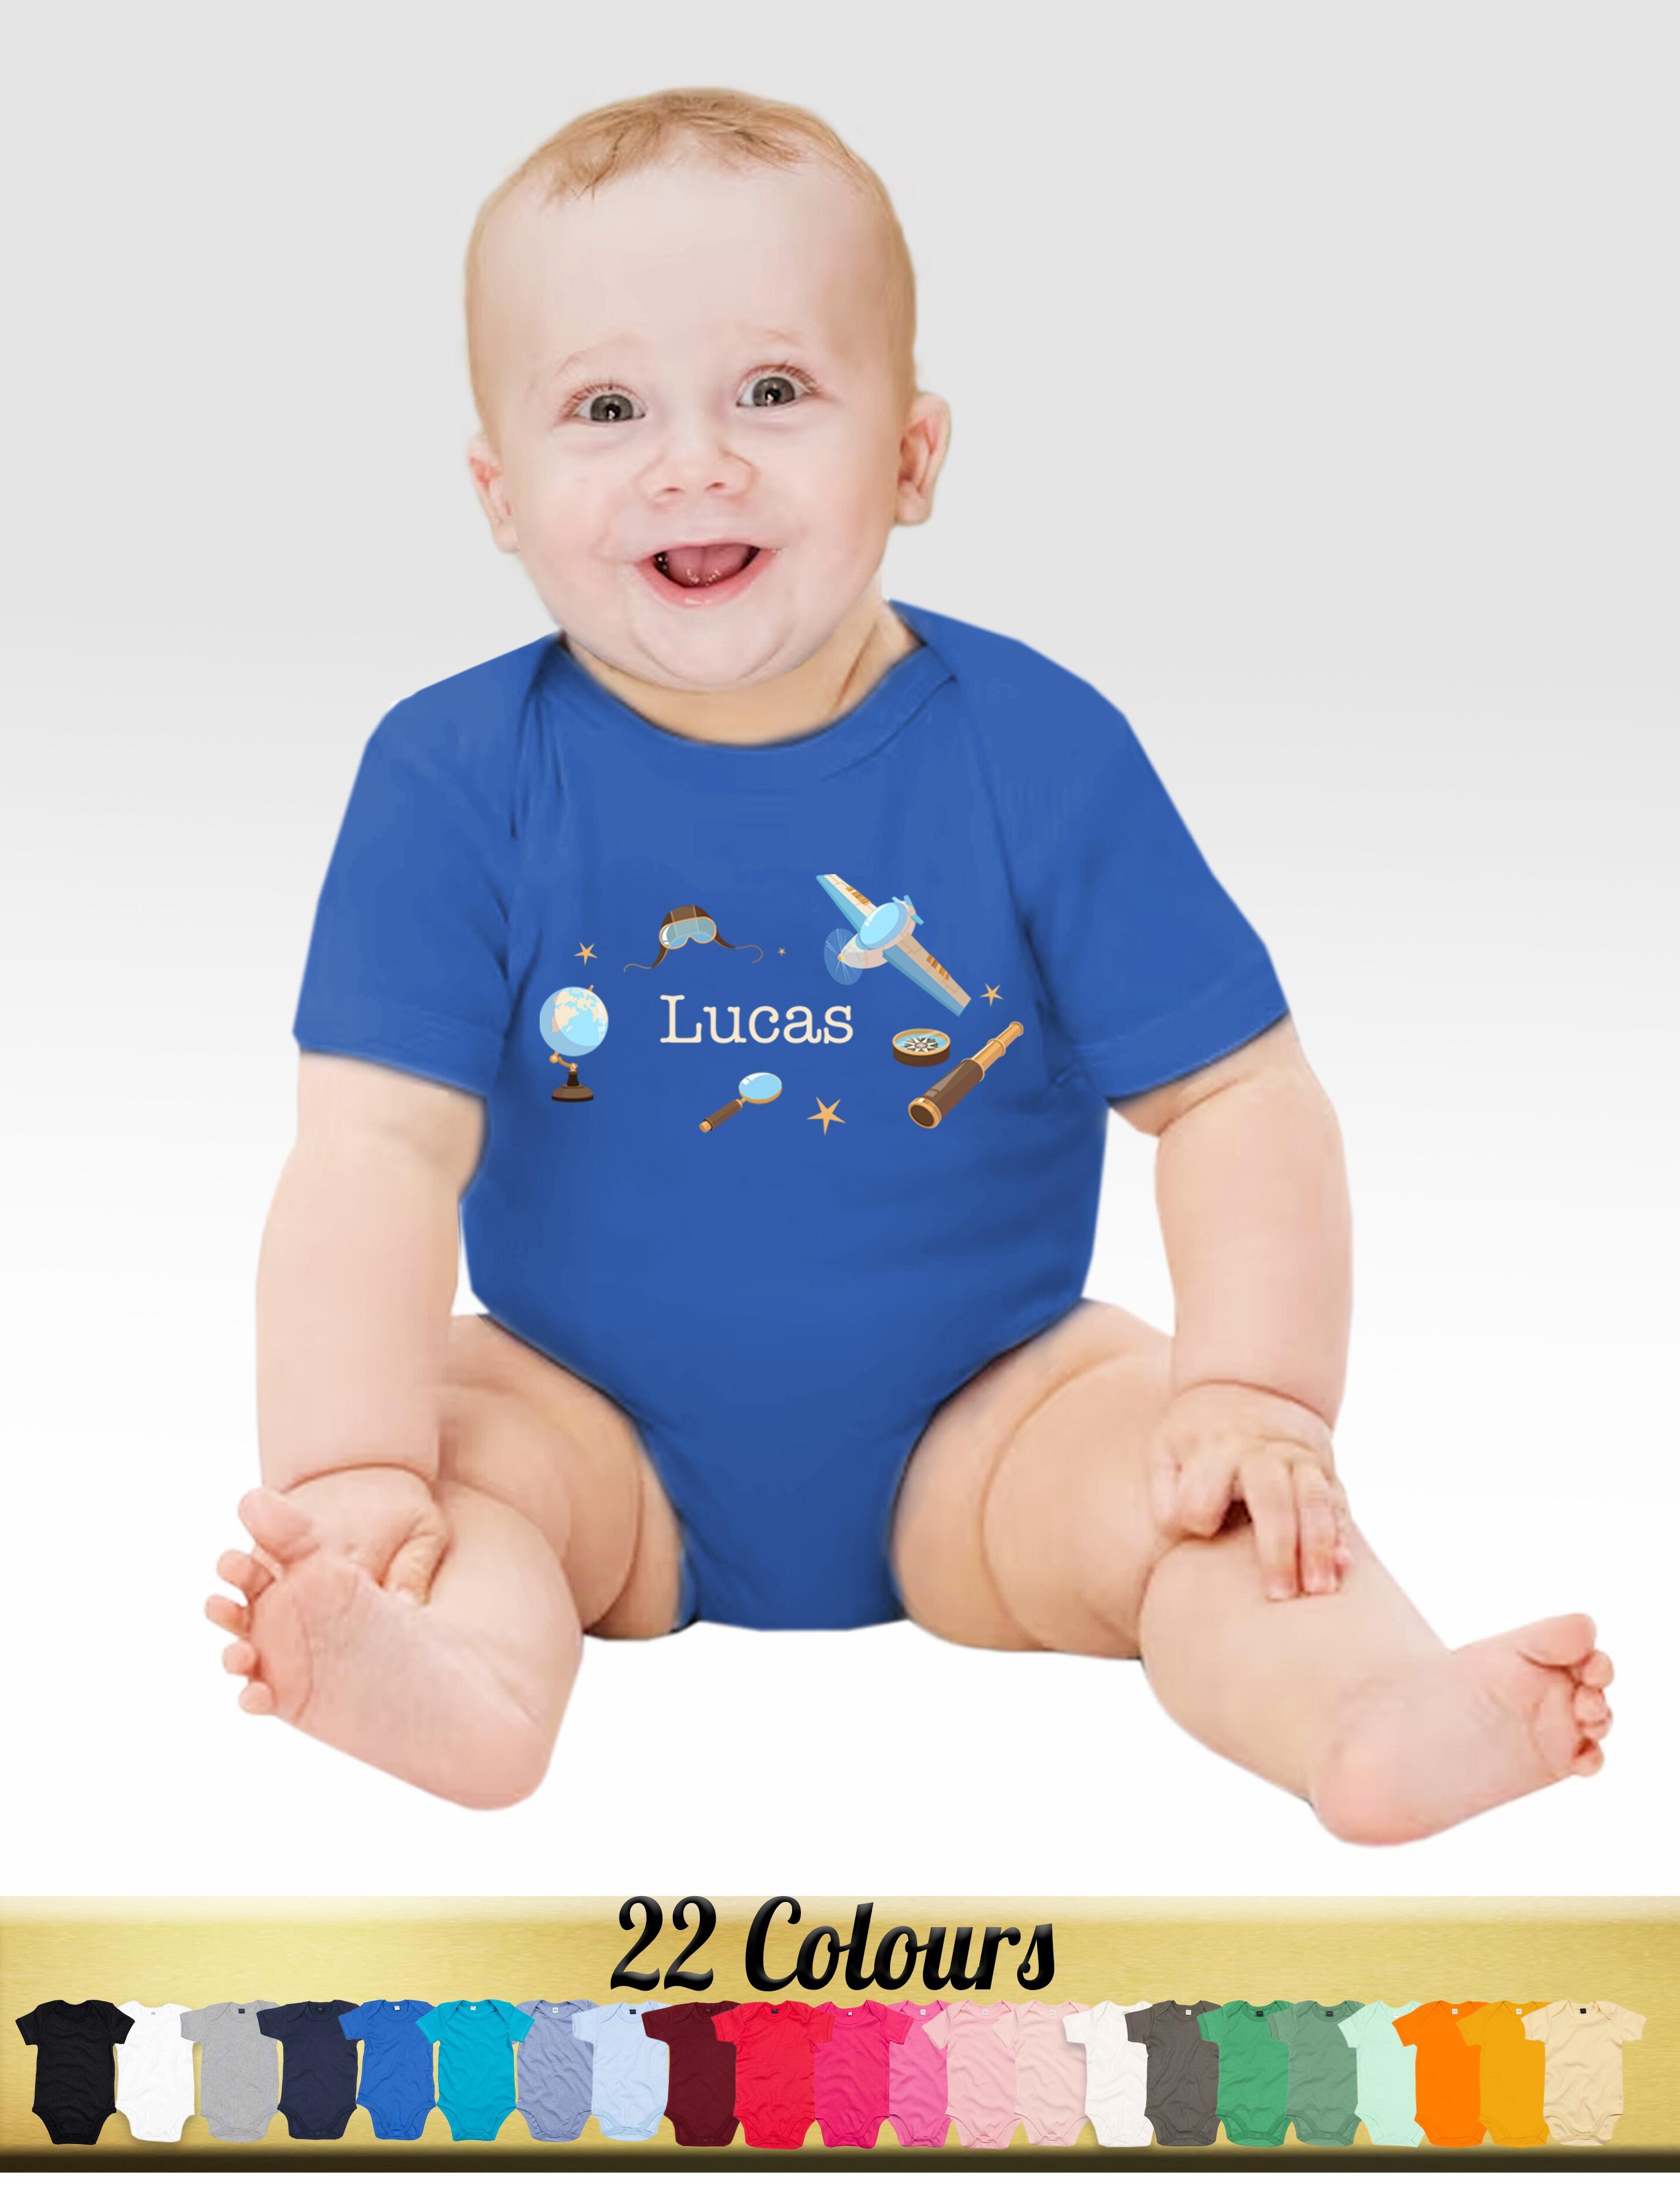 Personalised short sleeve boy baby body suit plane printed